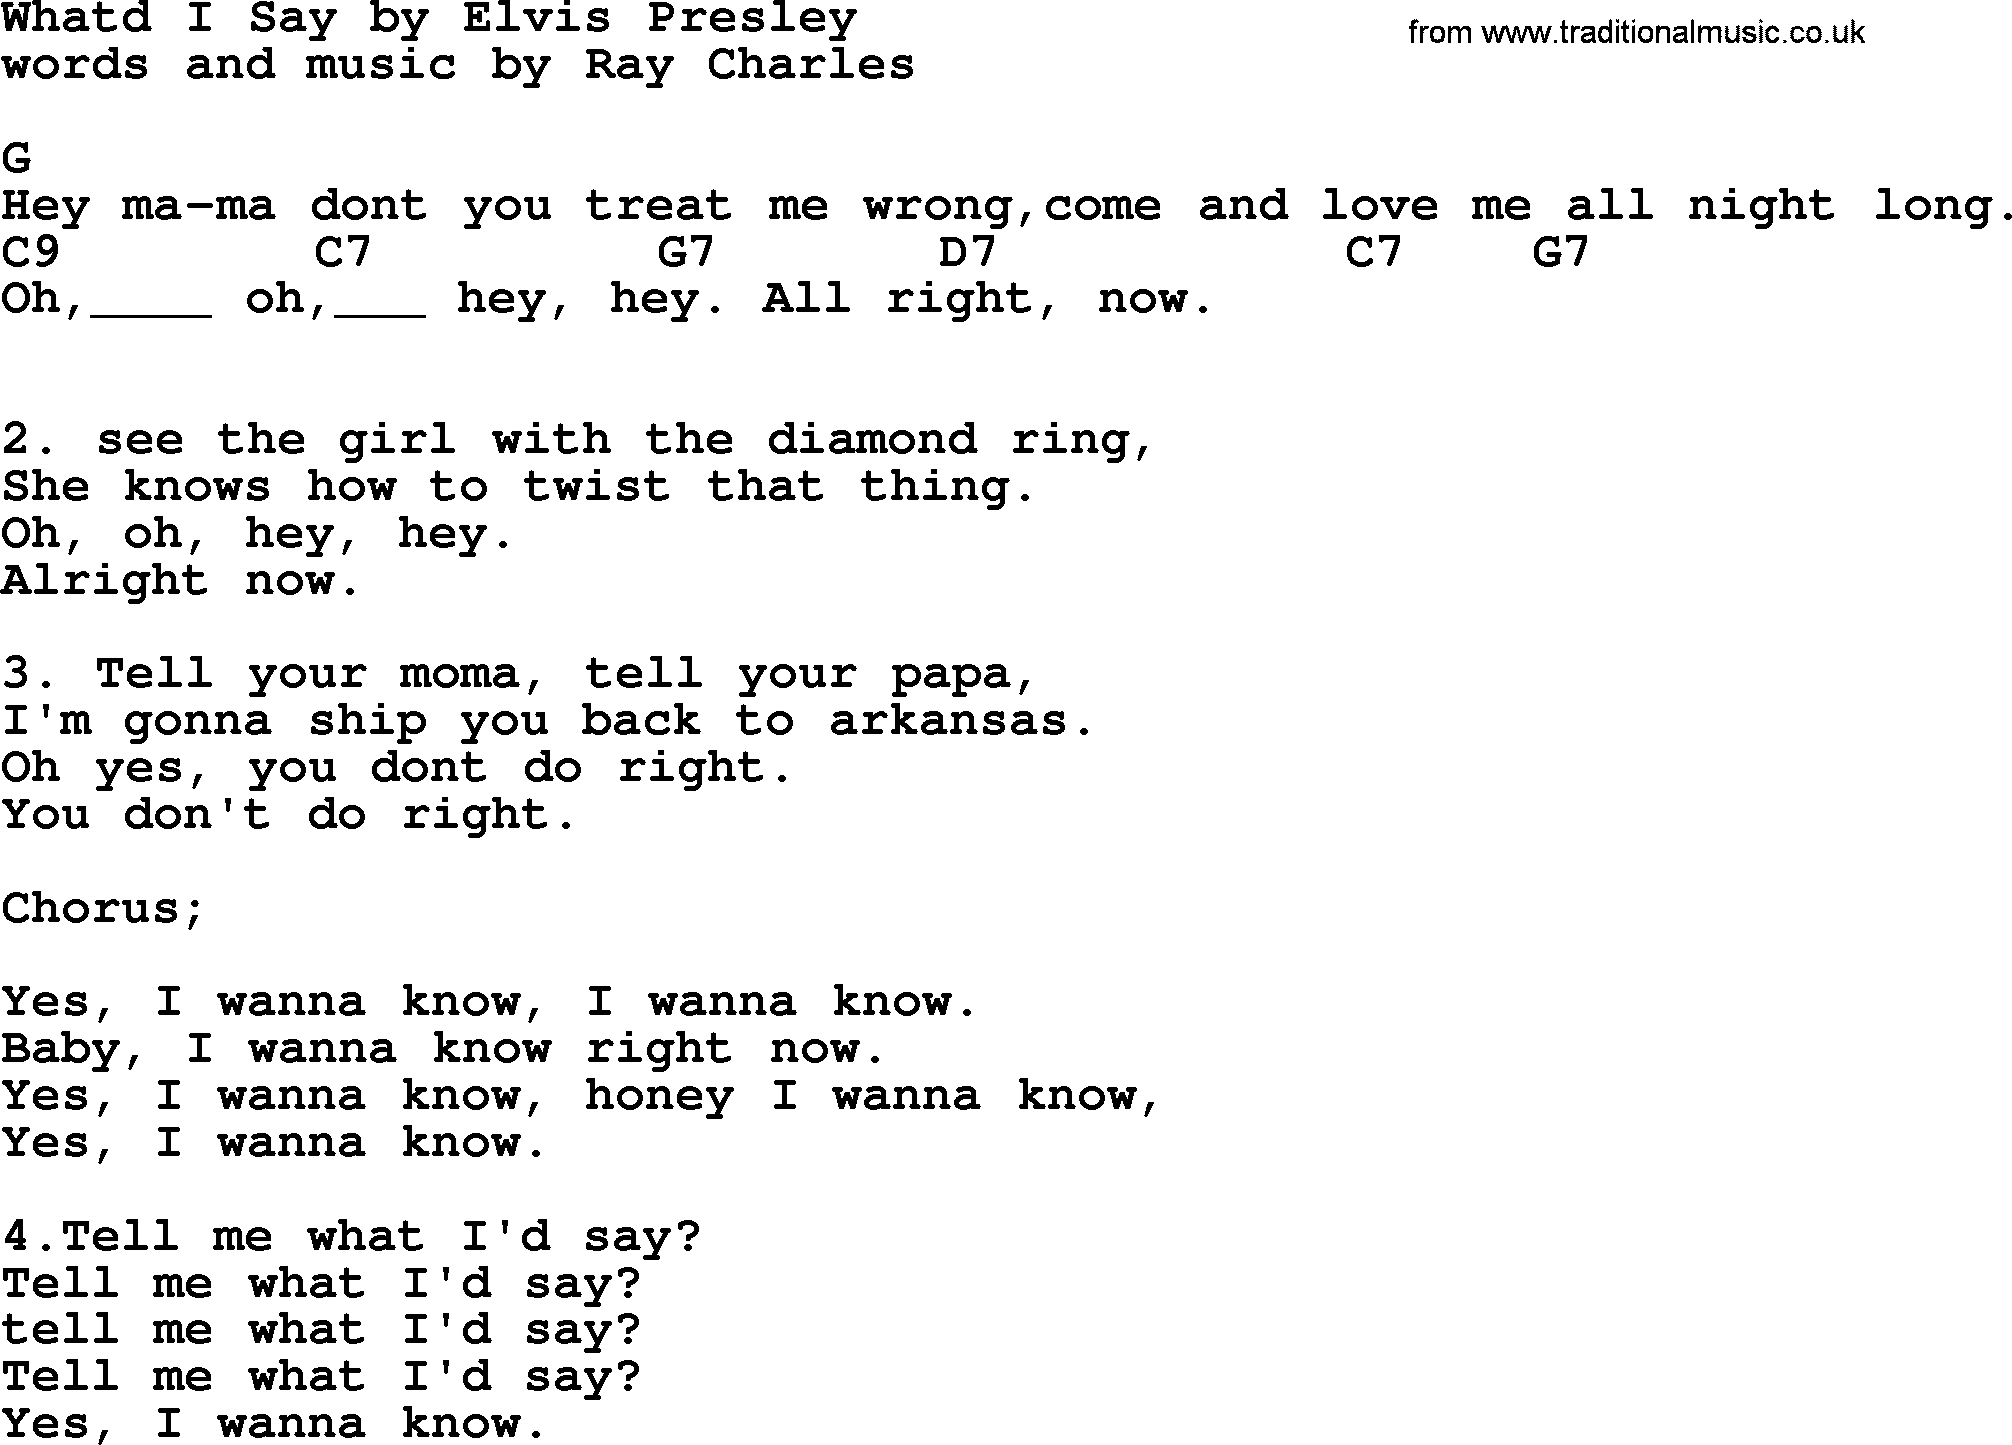 Elvis Presley song: Whatd I Say, lyrics and chords